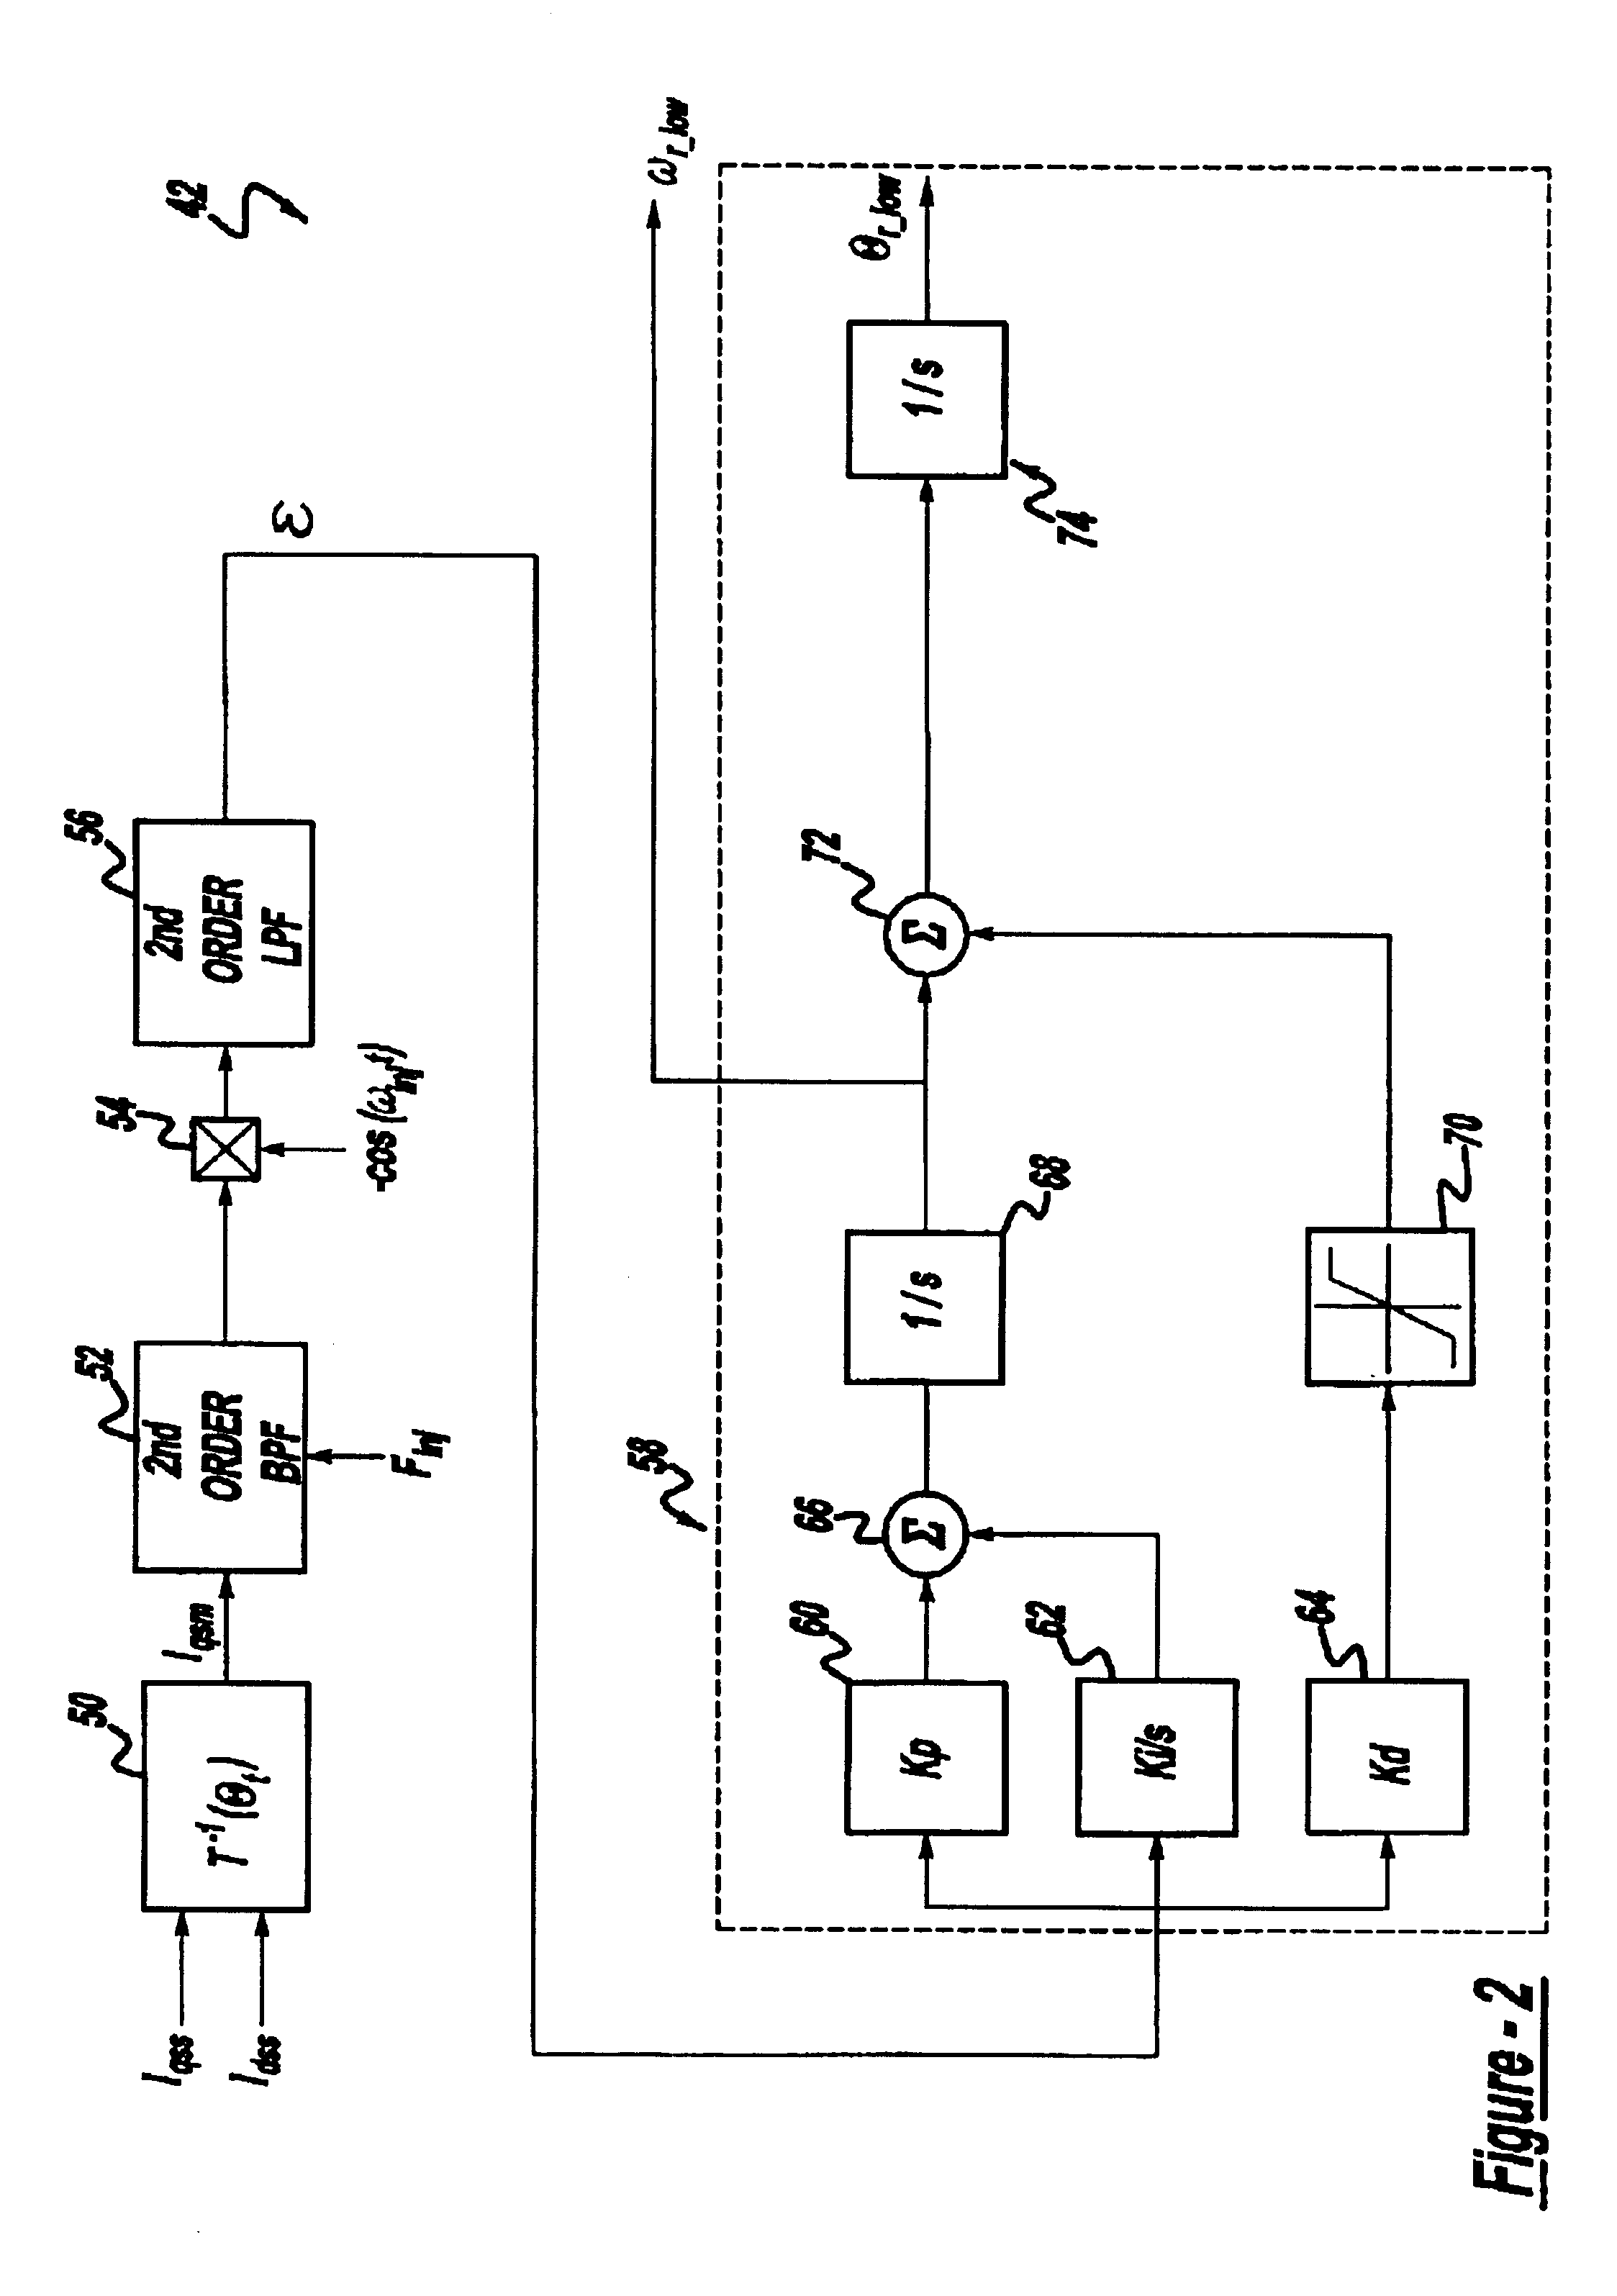 Position sensorless control algorithm for AC machine